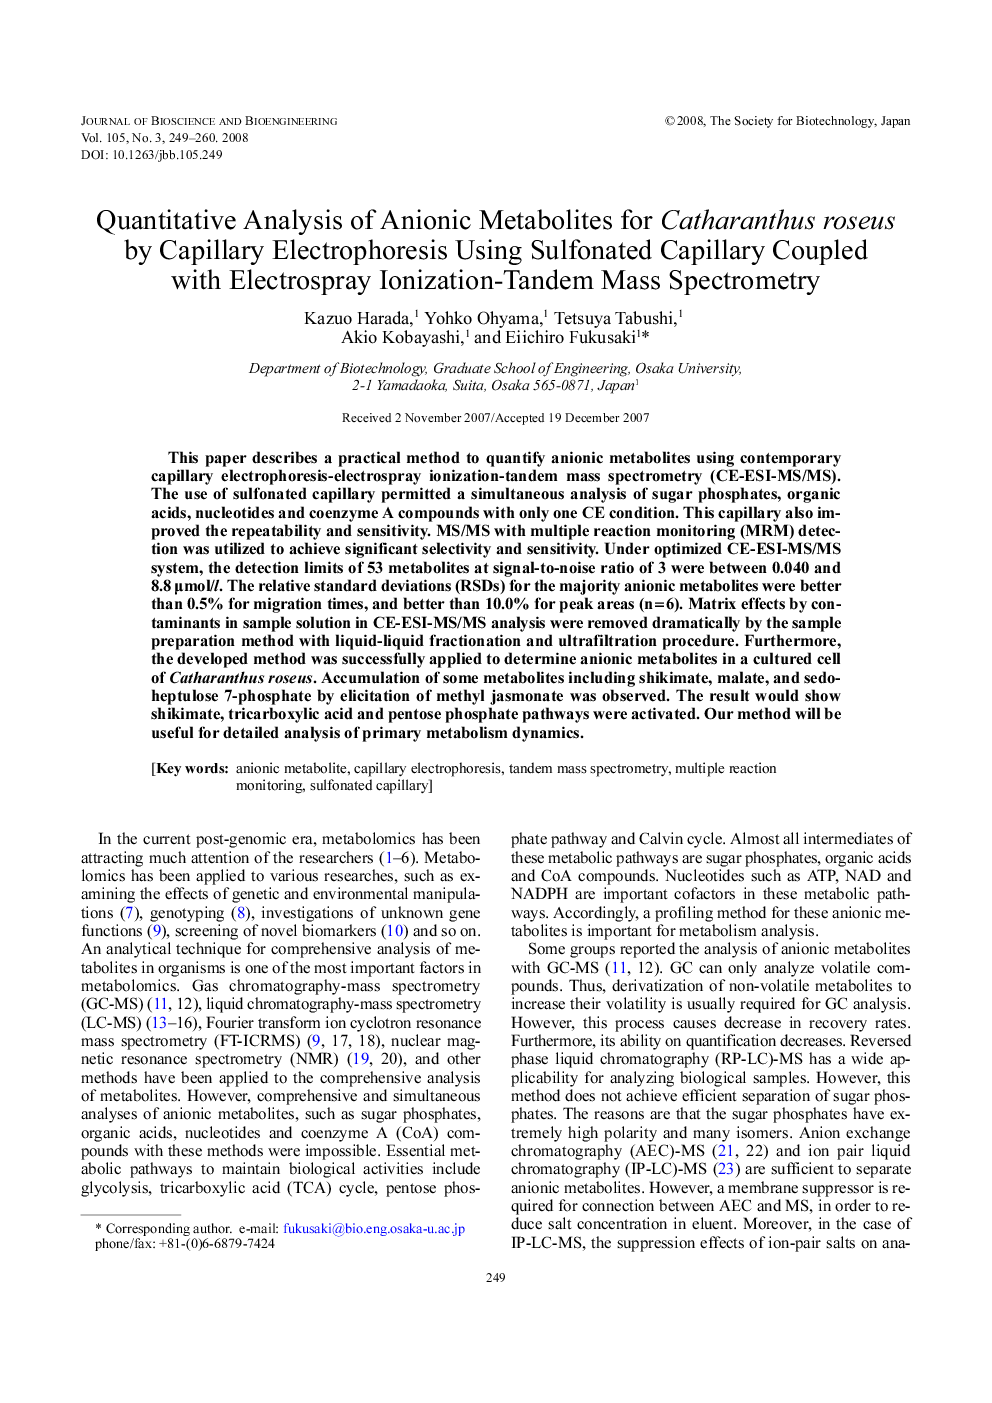 Quantitative analysis of anionic metabolites for Catharanthus roseus by capillary electrophoresis using sulfonated capillary coupled with electrospray ionization-tandem mass spectrometry